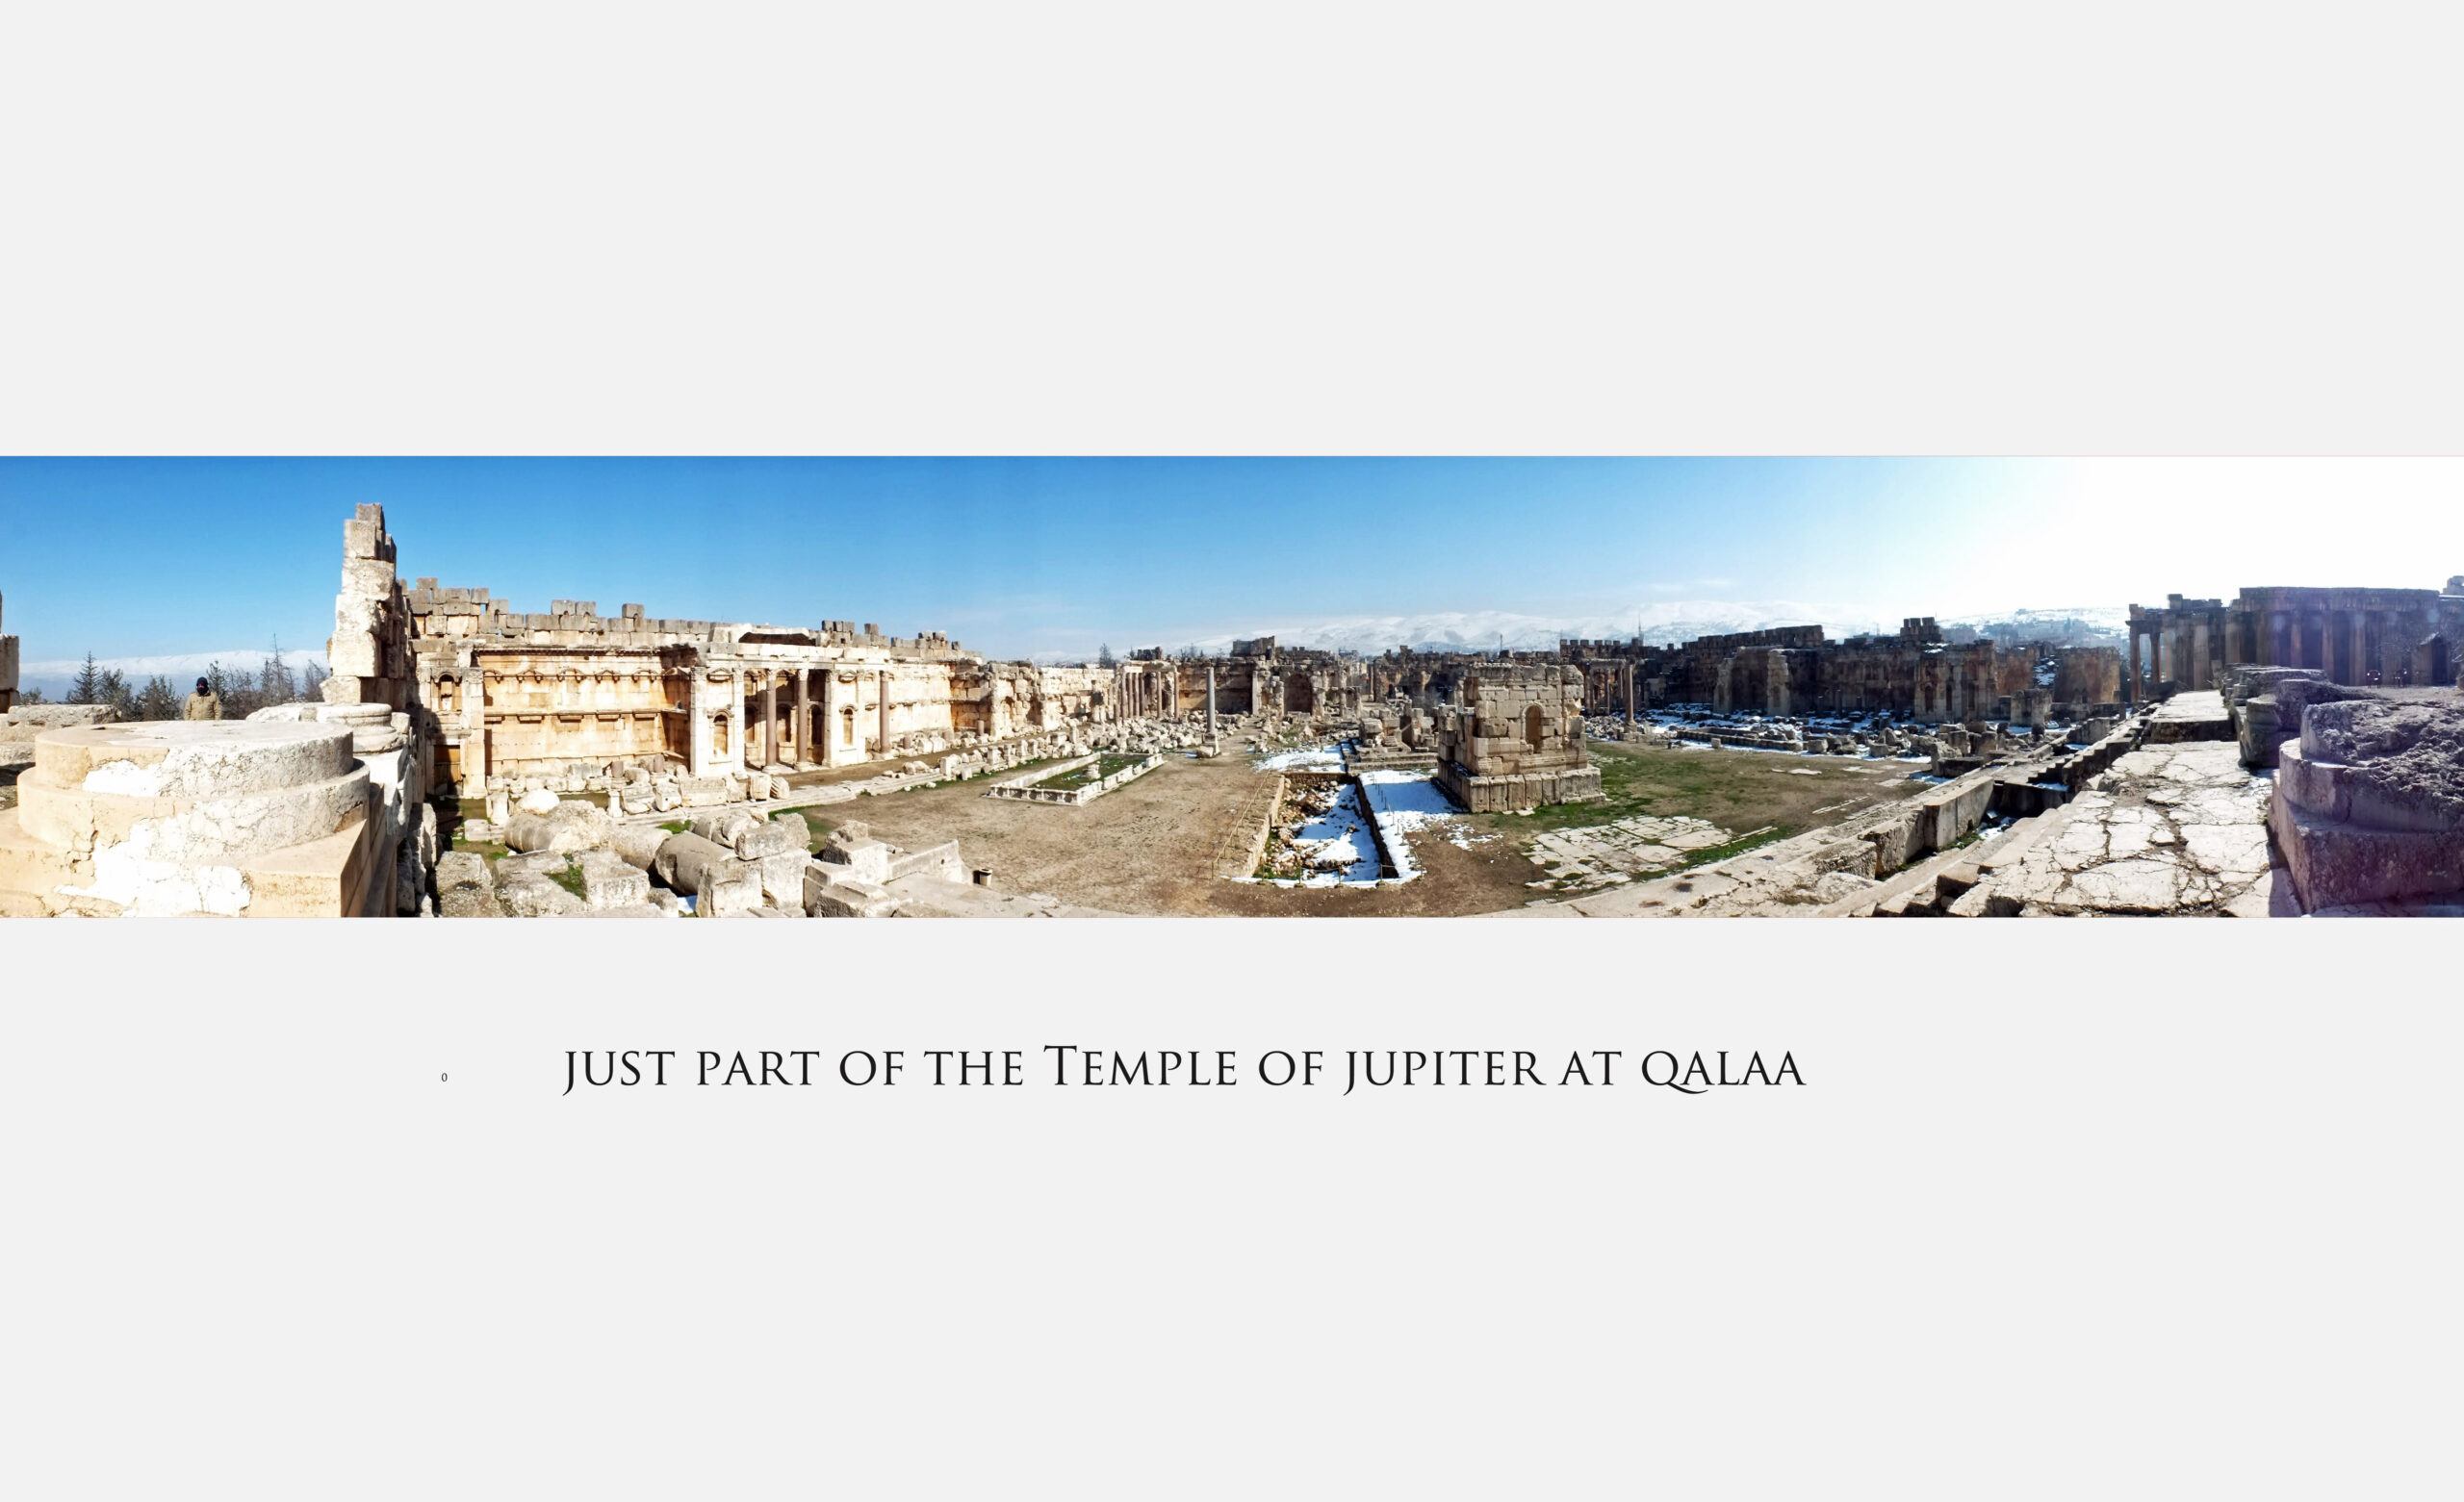 The temple of Jupiter at Qalaa